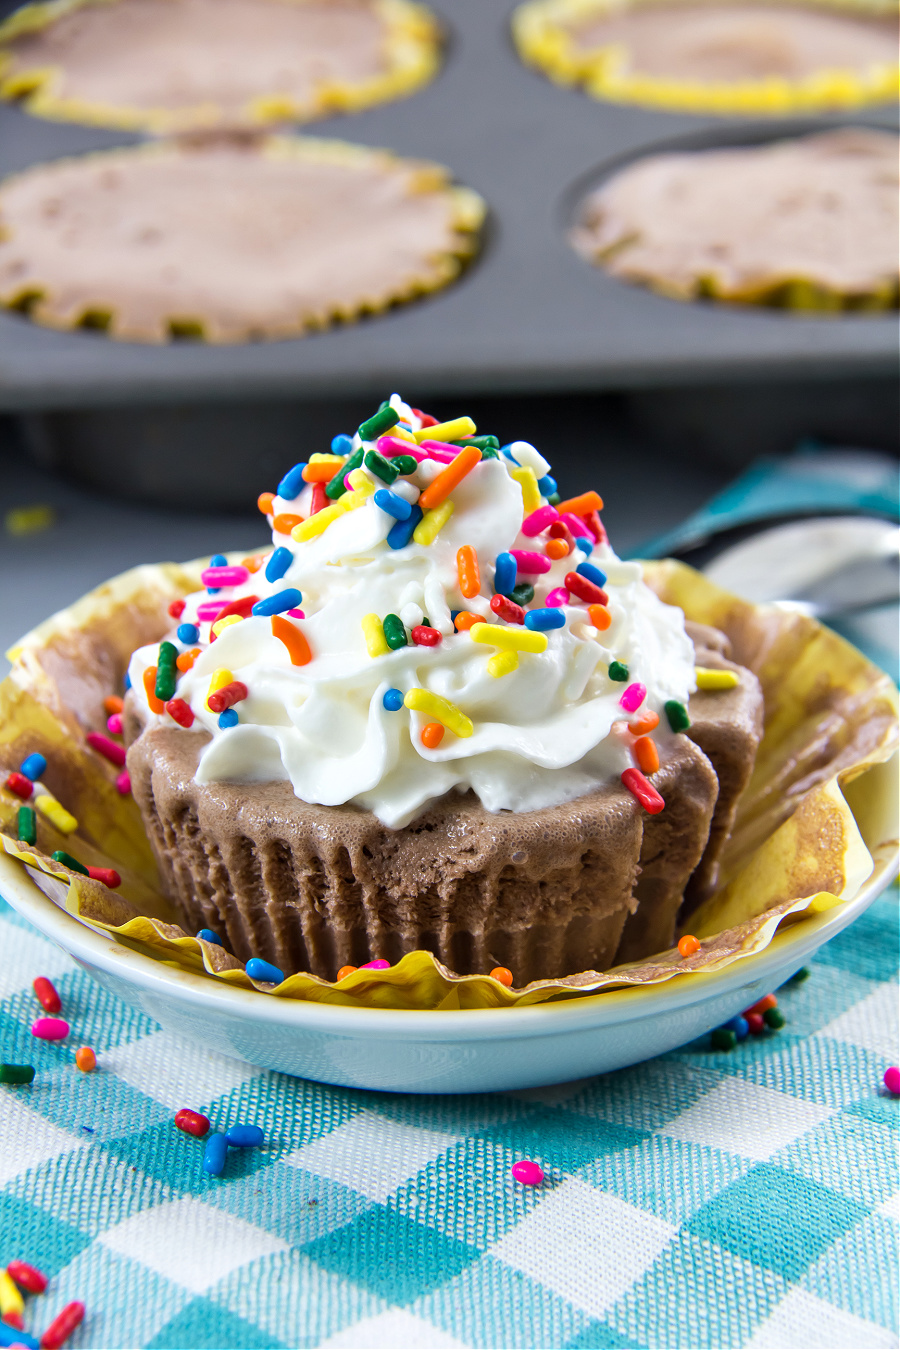 gluten-free ice cream cake cupcakes with sprinkles